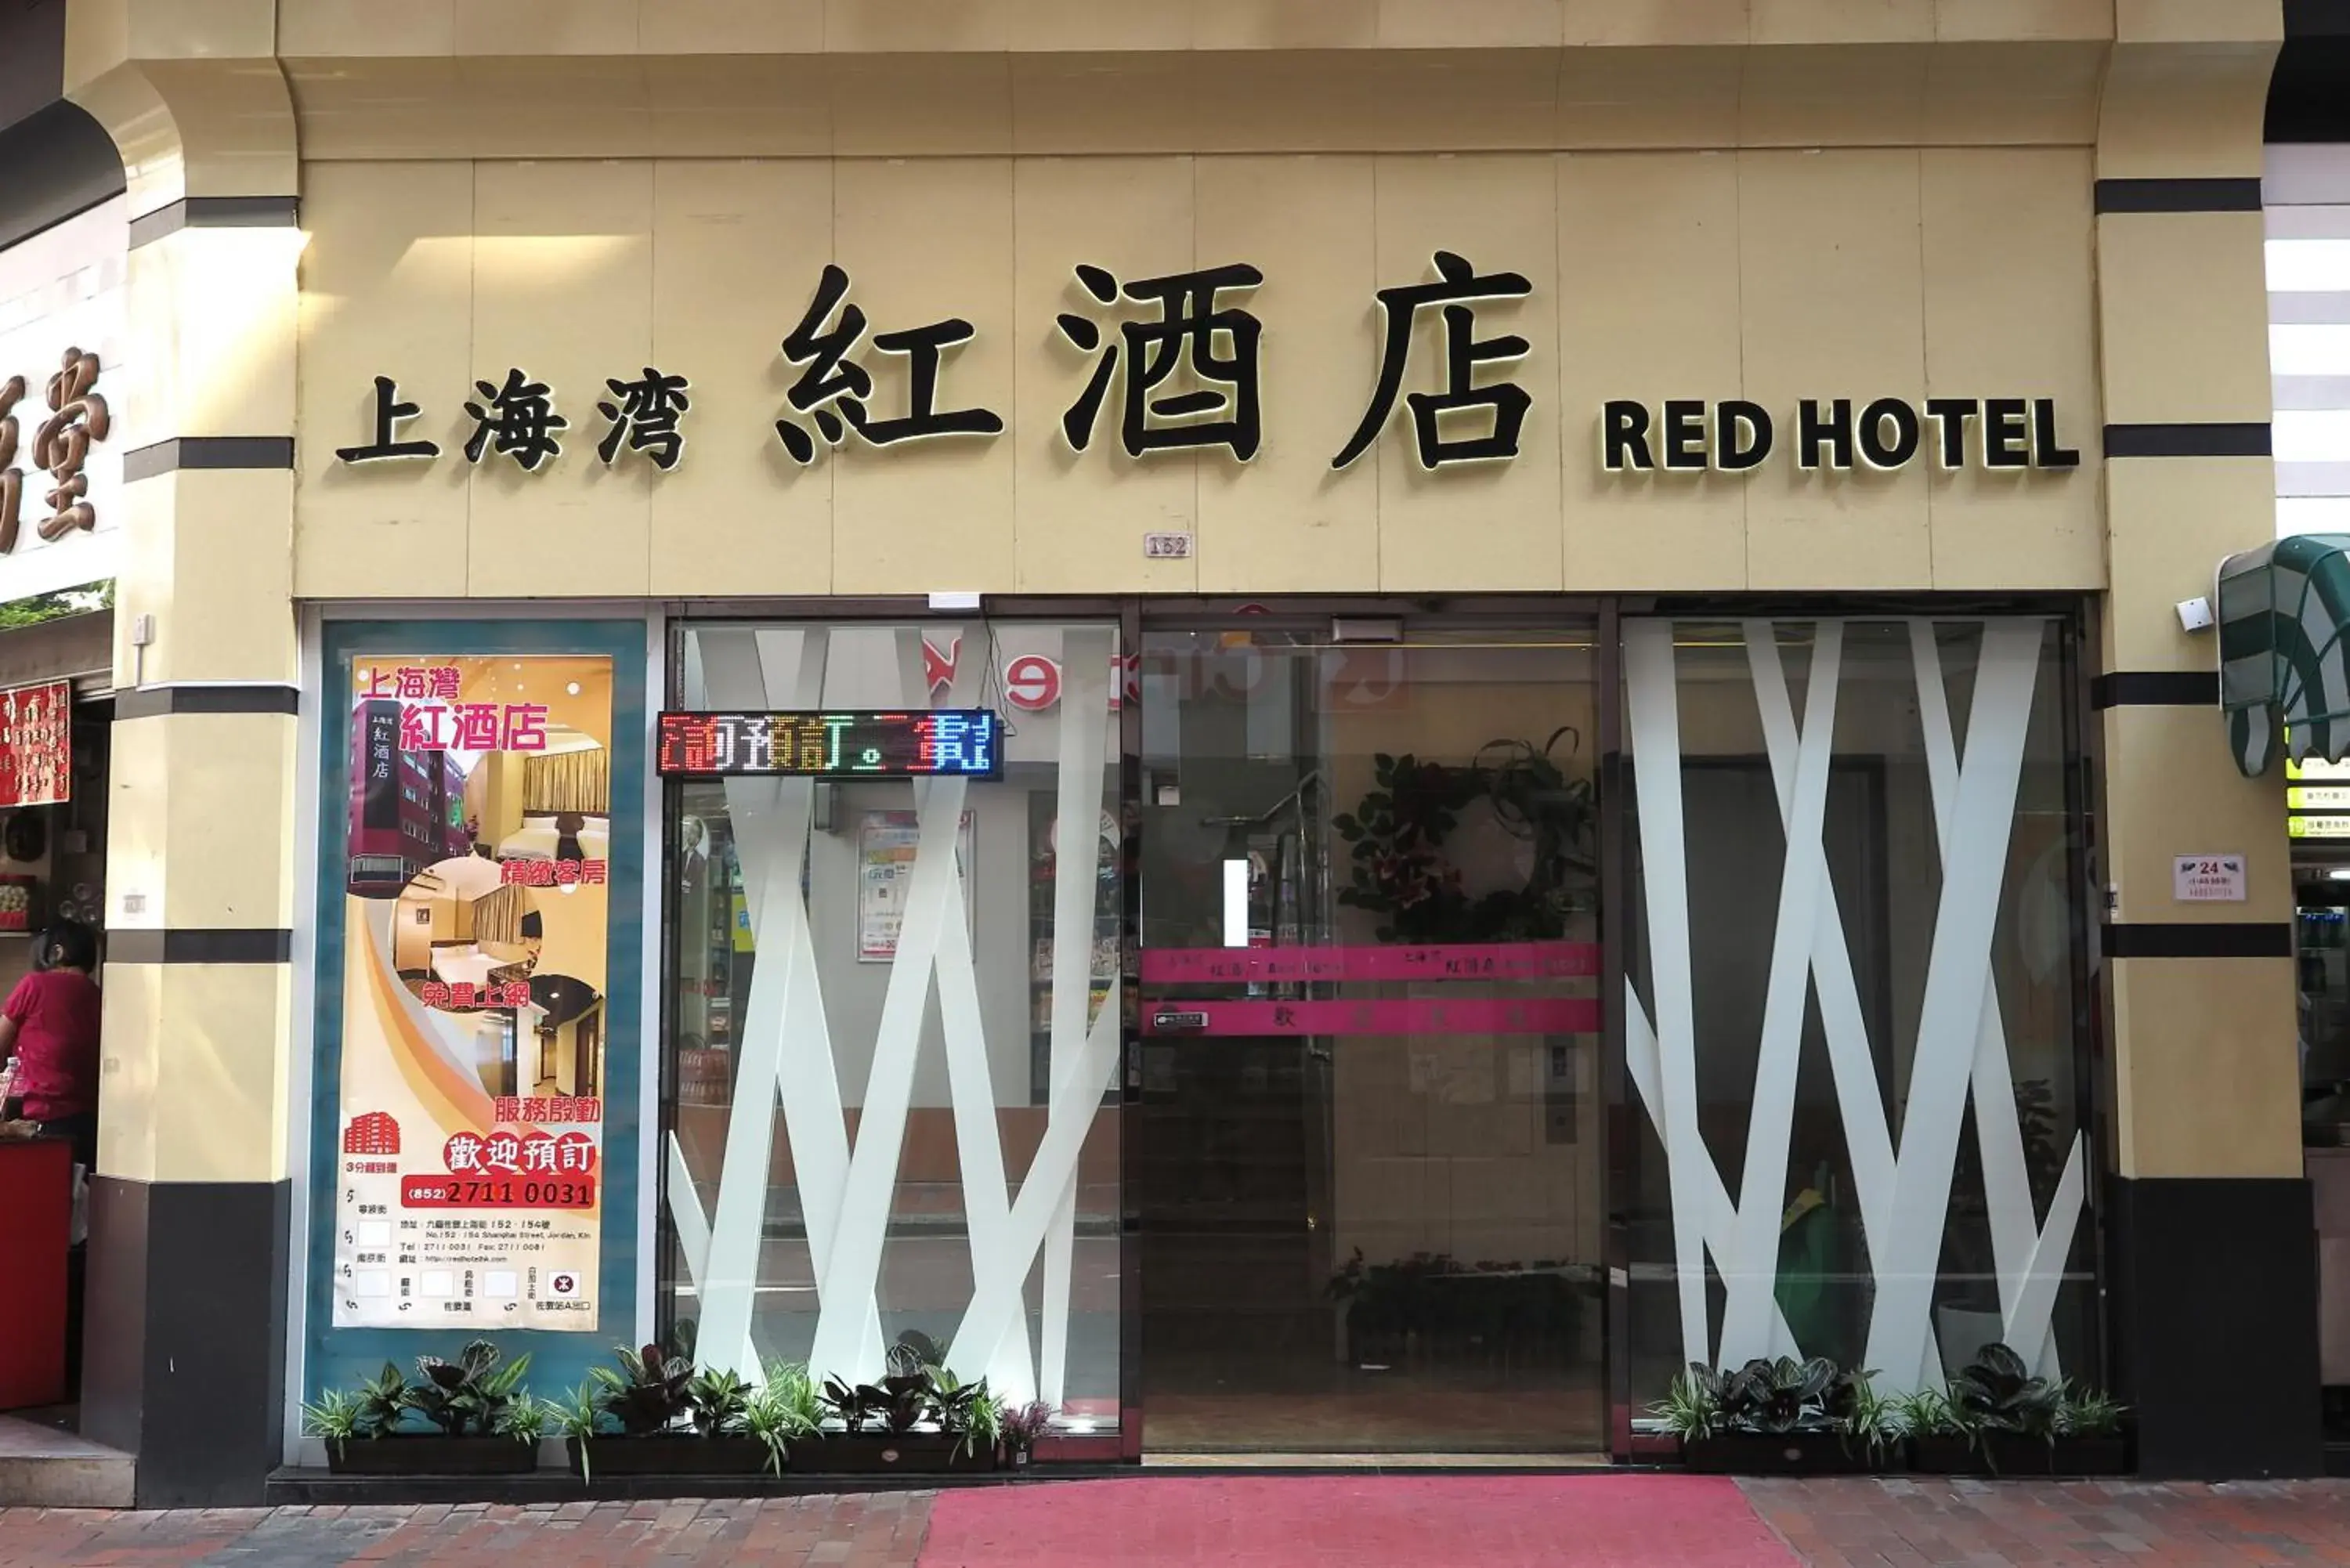 Facade/entrance in Shanghai Red Hotel